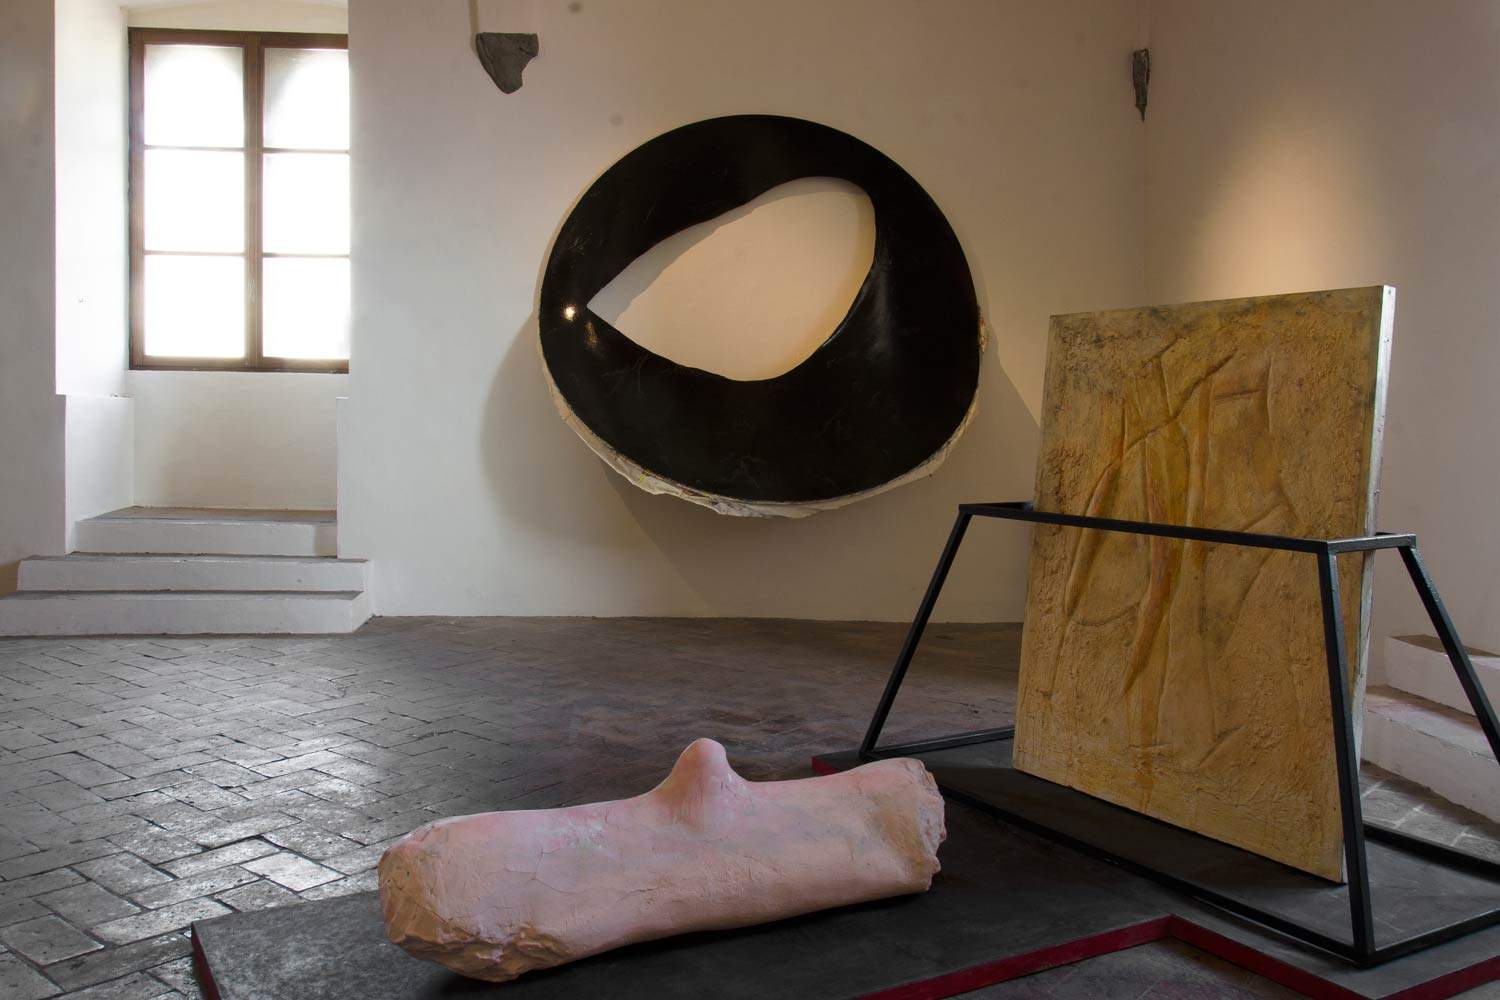 Volterra dedicates two exhibitions to Mino Trafeli in centennial year